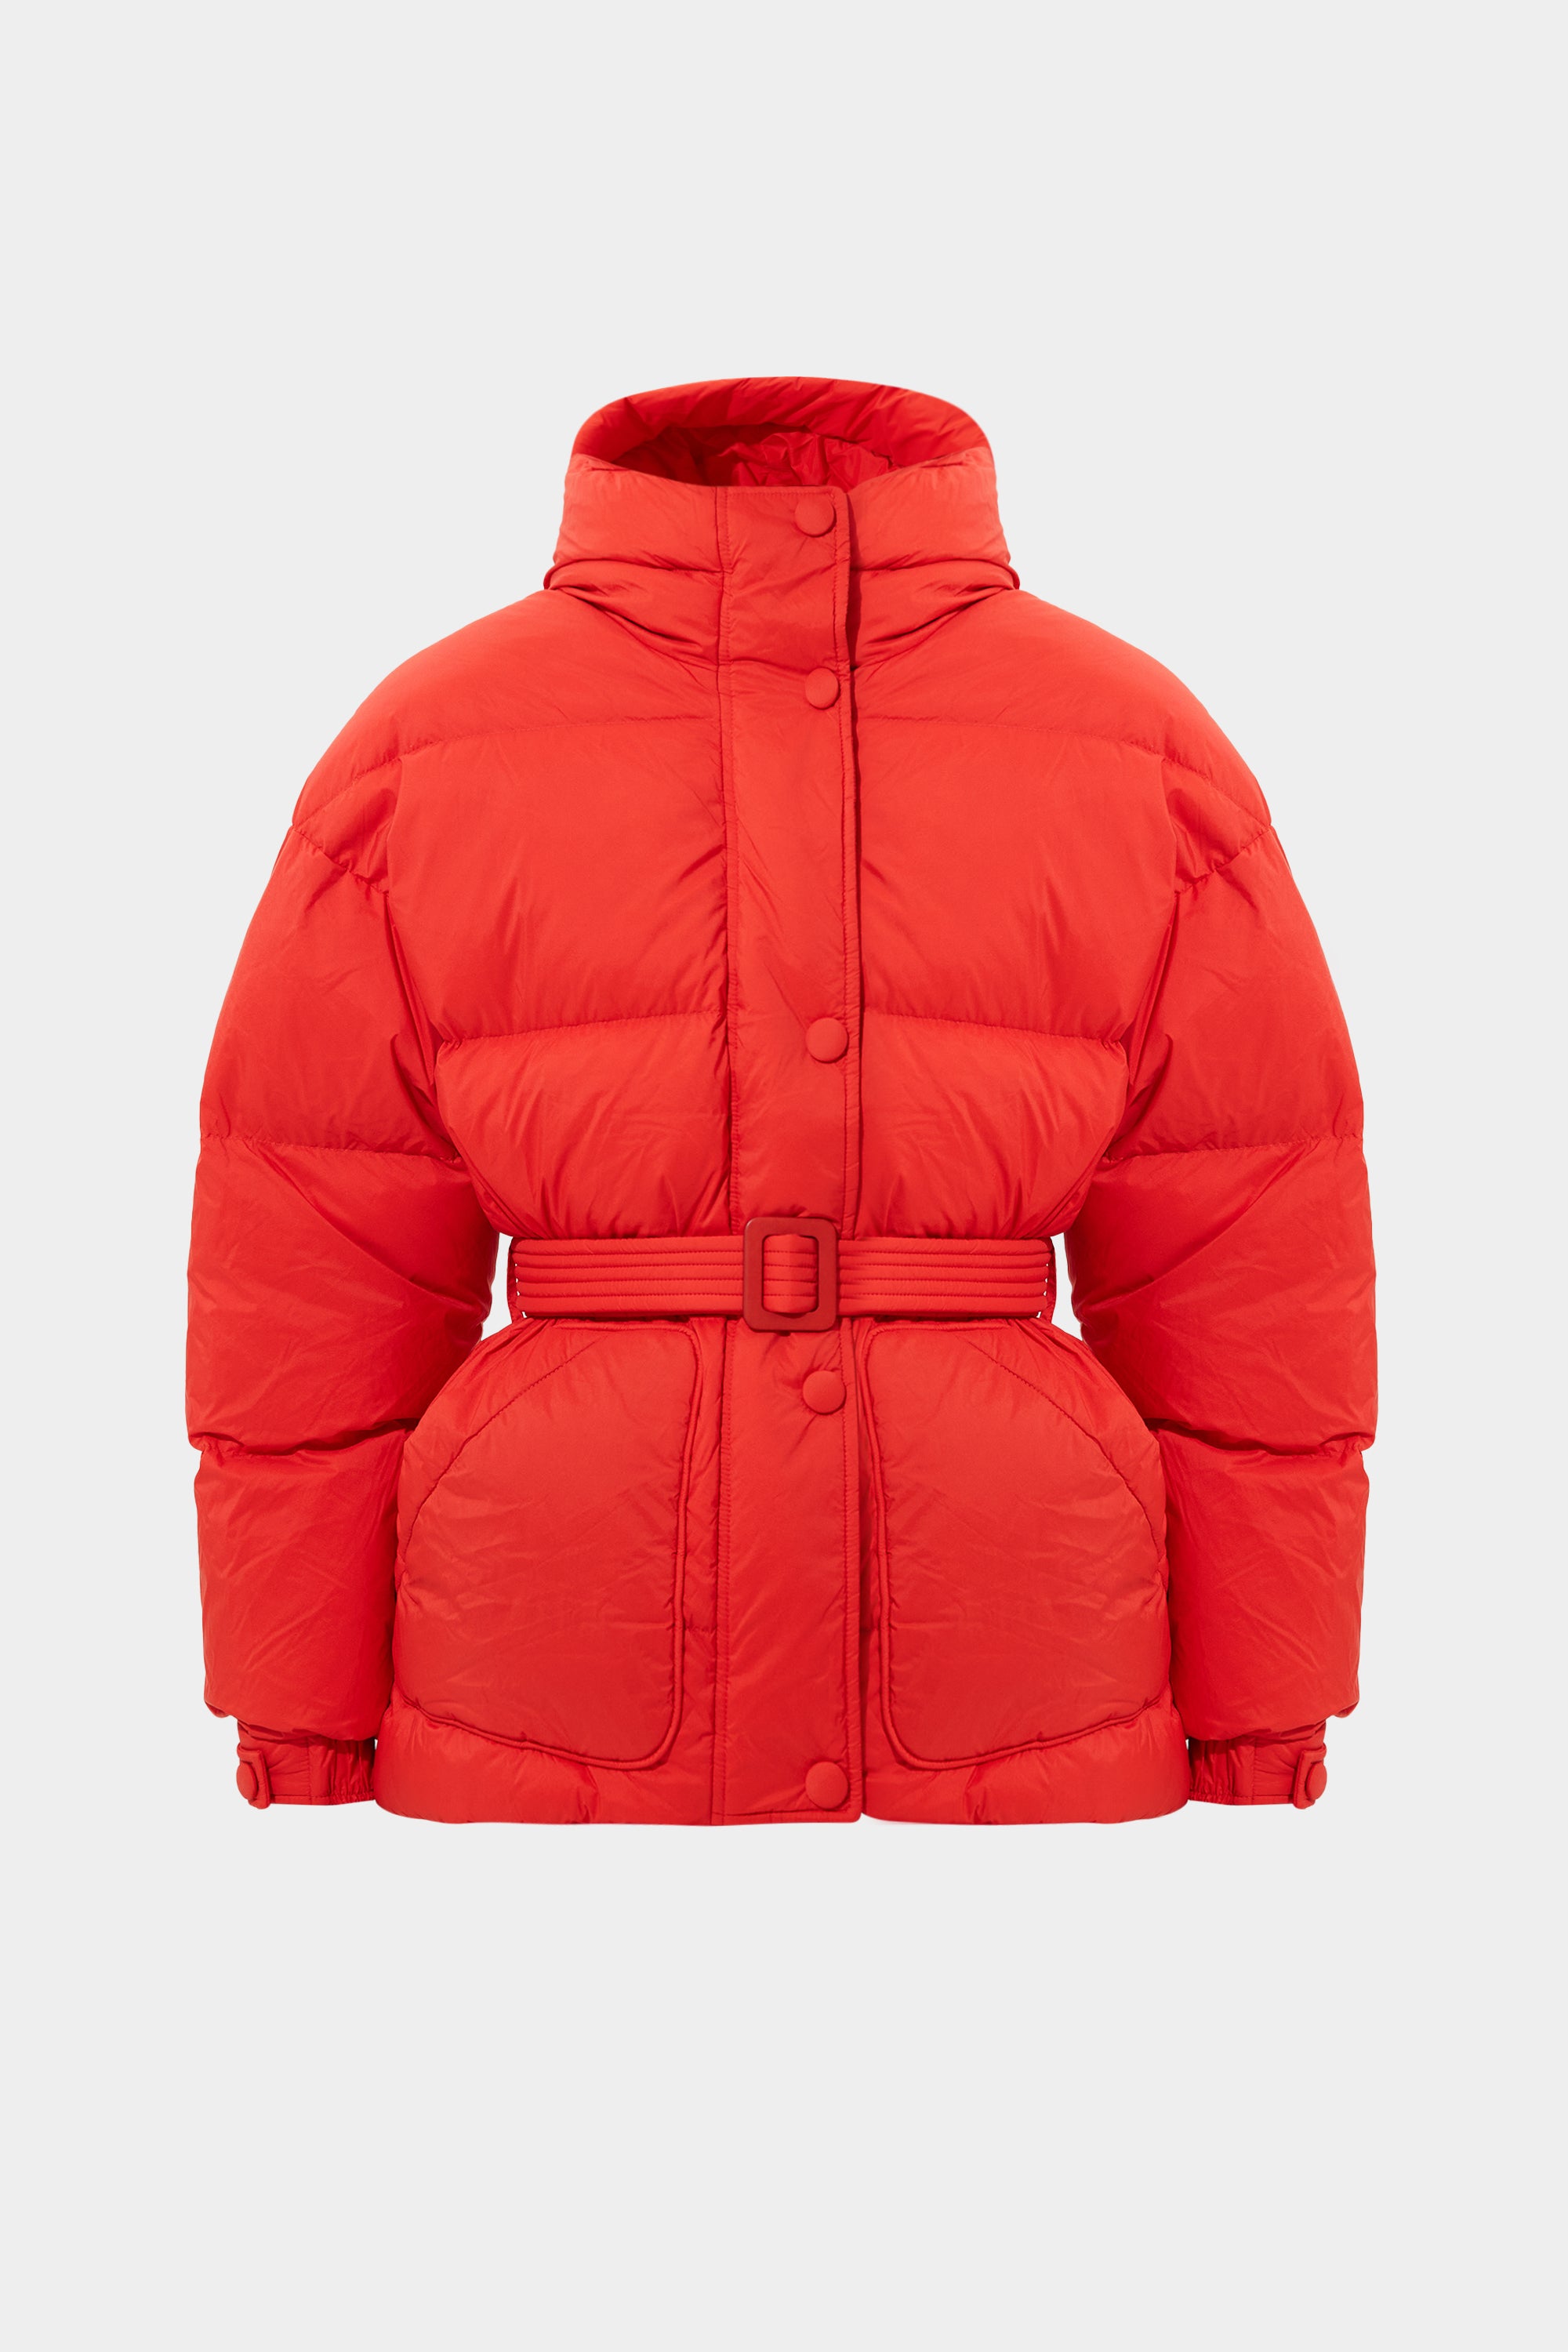 Michlin Jacket Soft Red